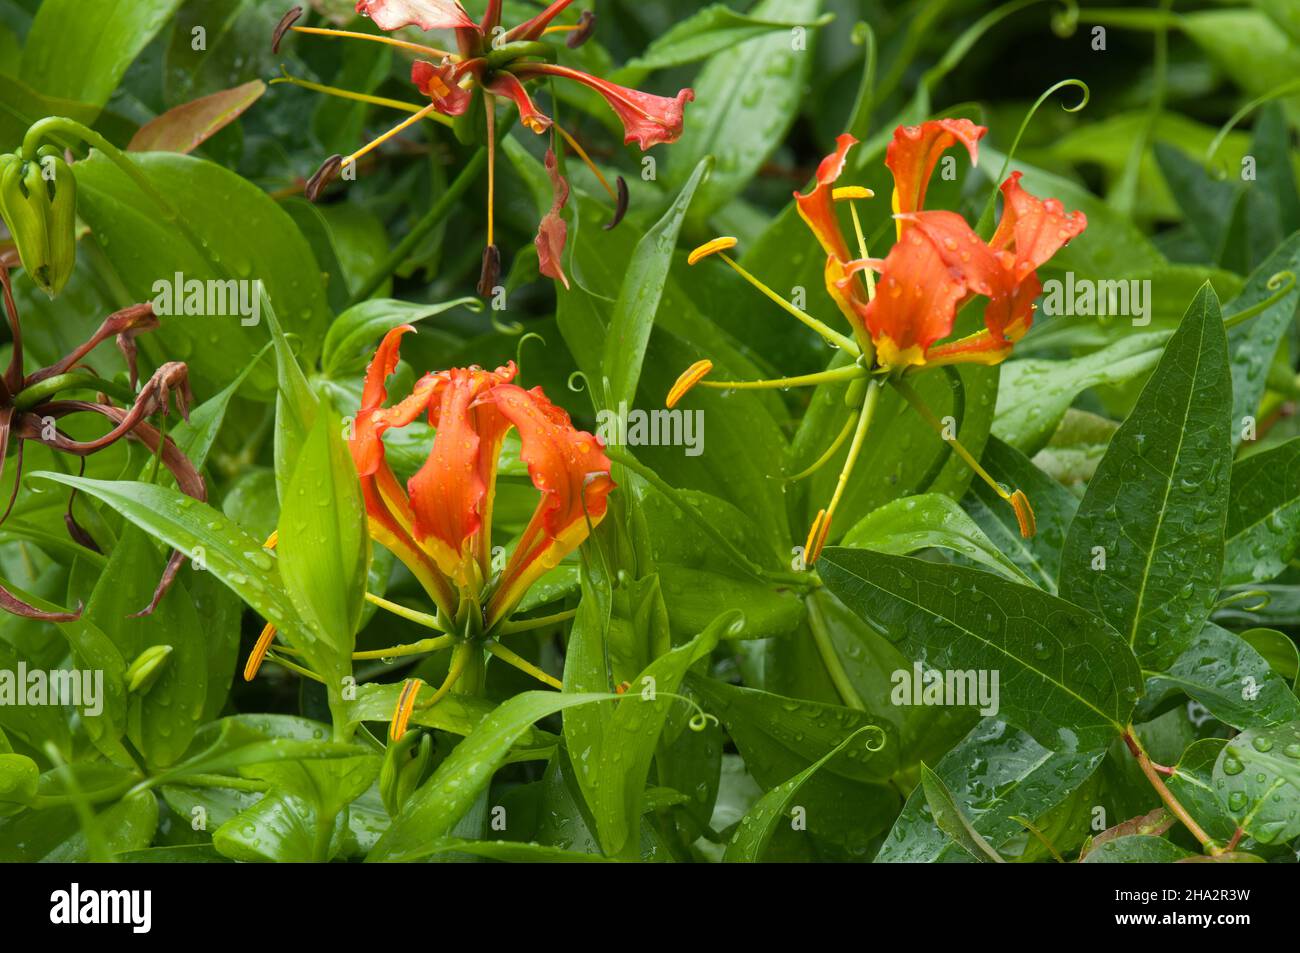 Sydney Australia, orange flowers of a heteropteris syringifolia native to Bolivia, Paraguay and Brazil after rain Stock Photo